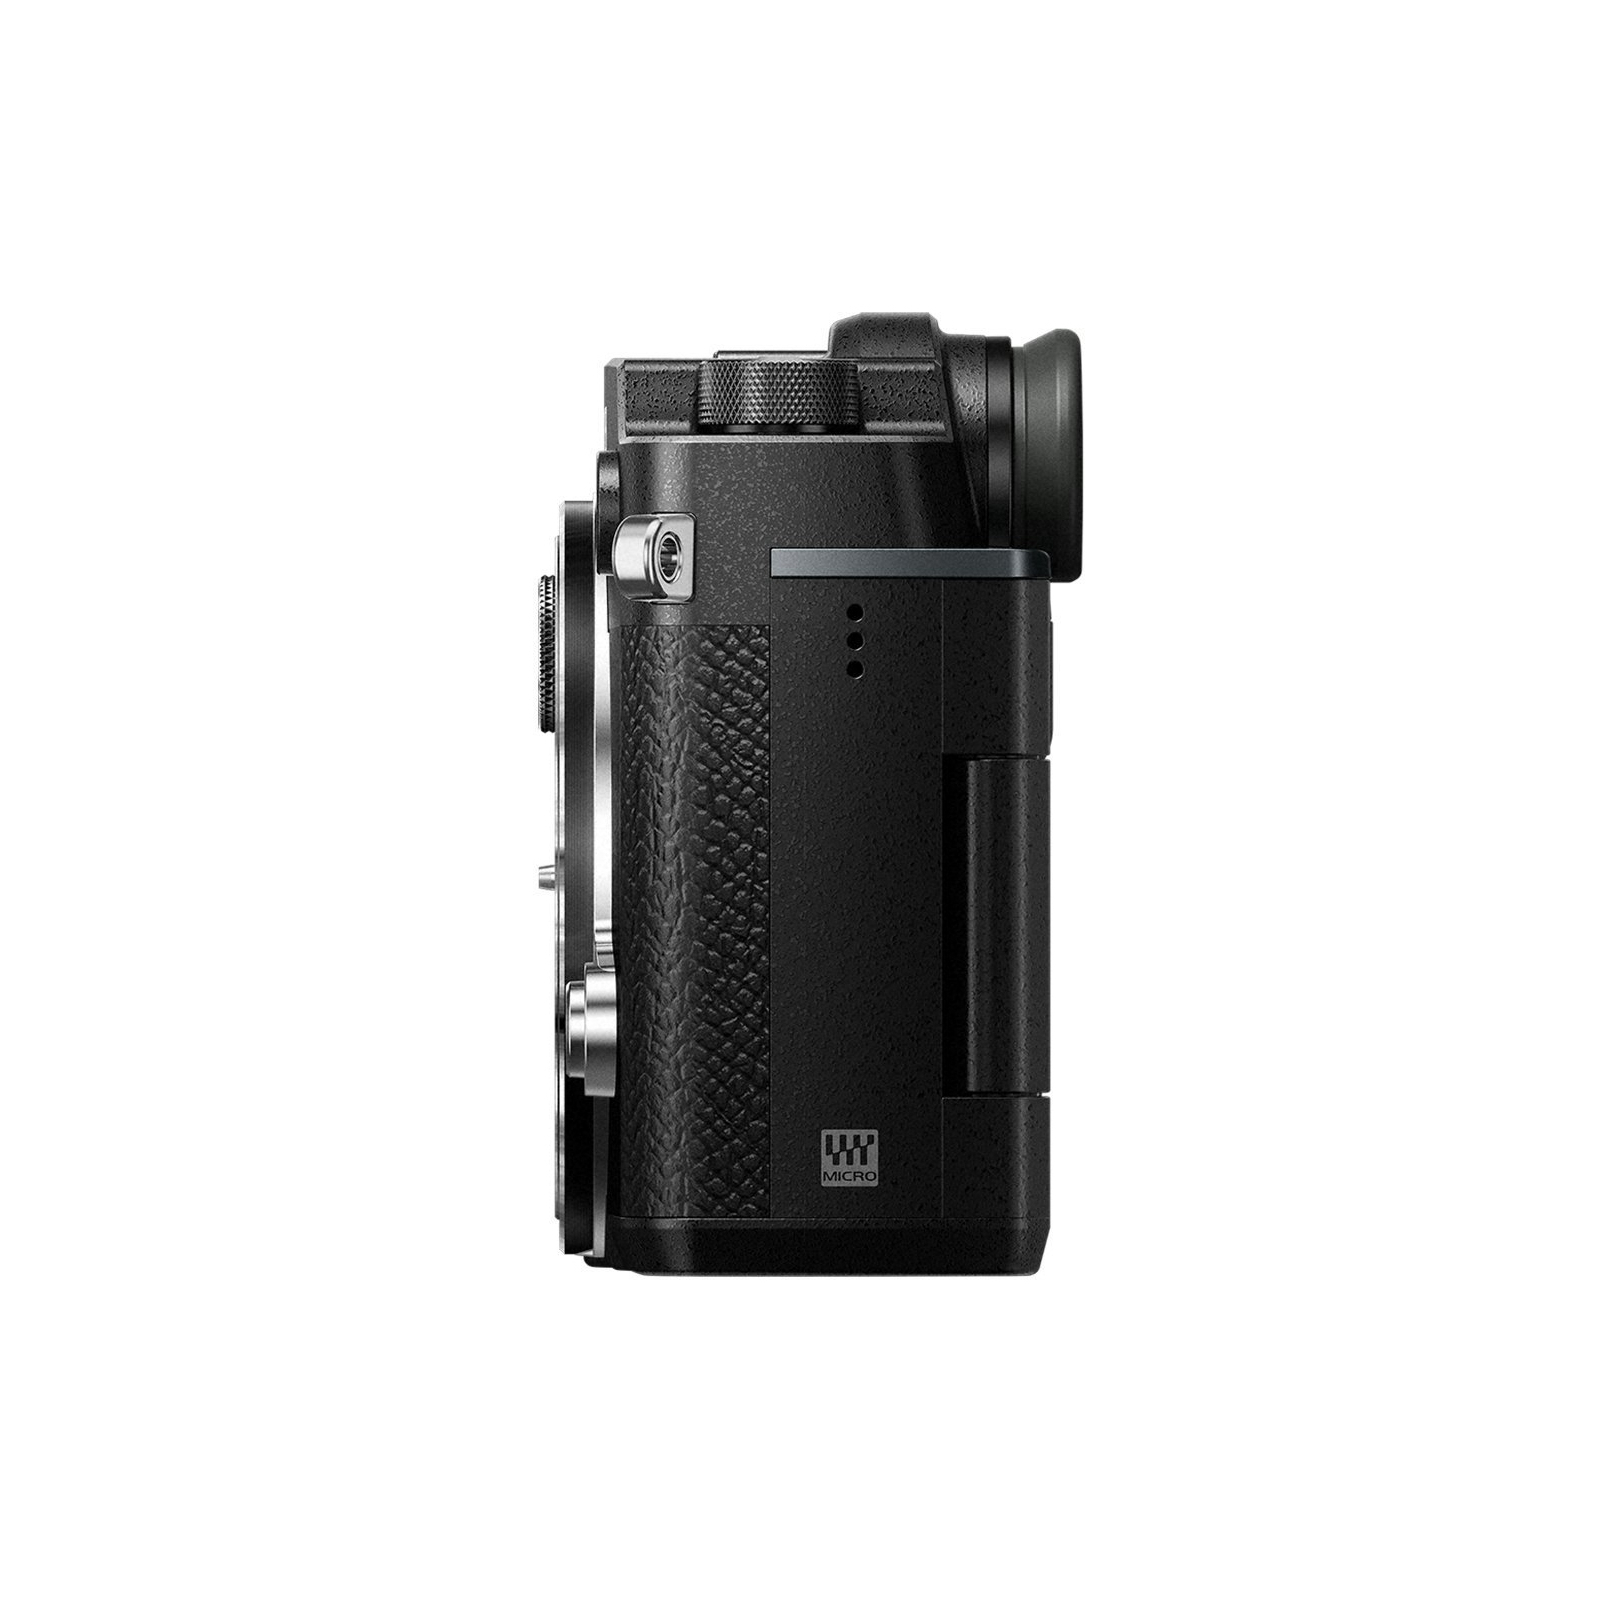 Цифровой фотоаппарат Olympus PEN-F 17mm 1:1.8 Kit black/black (V204063BE000) изображение 6